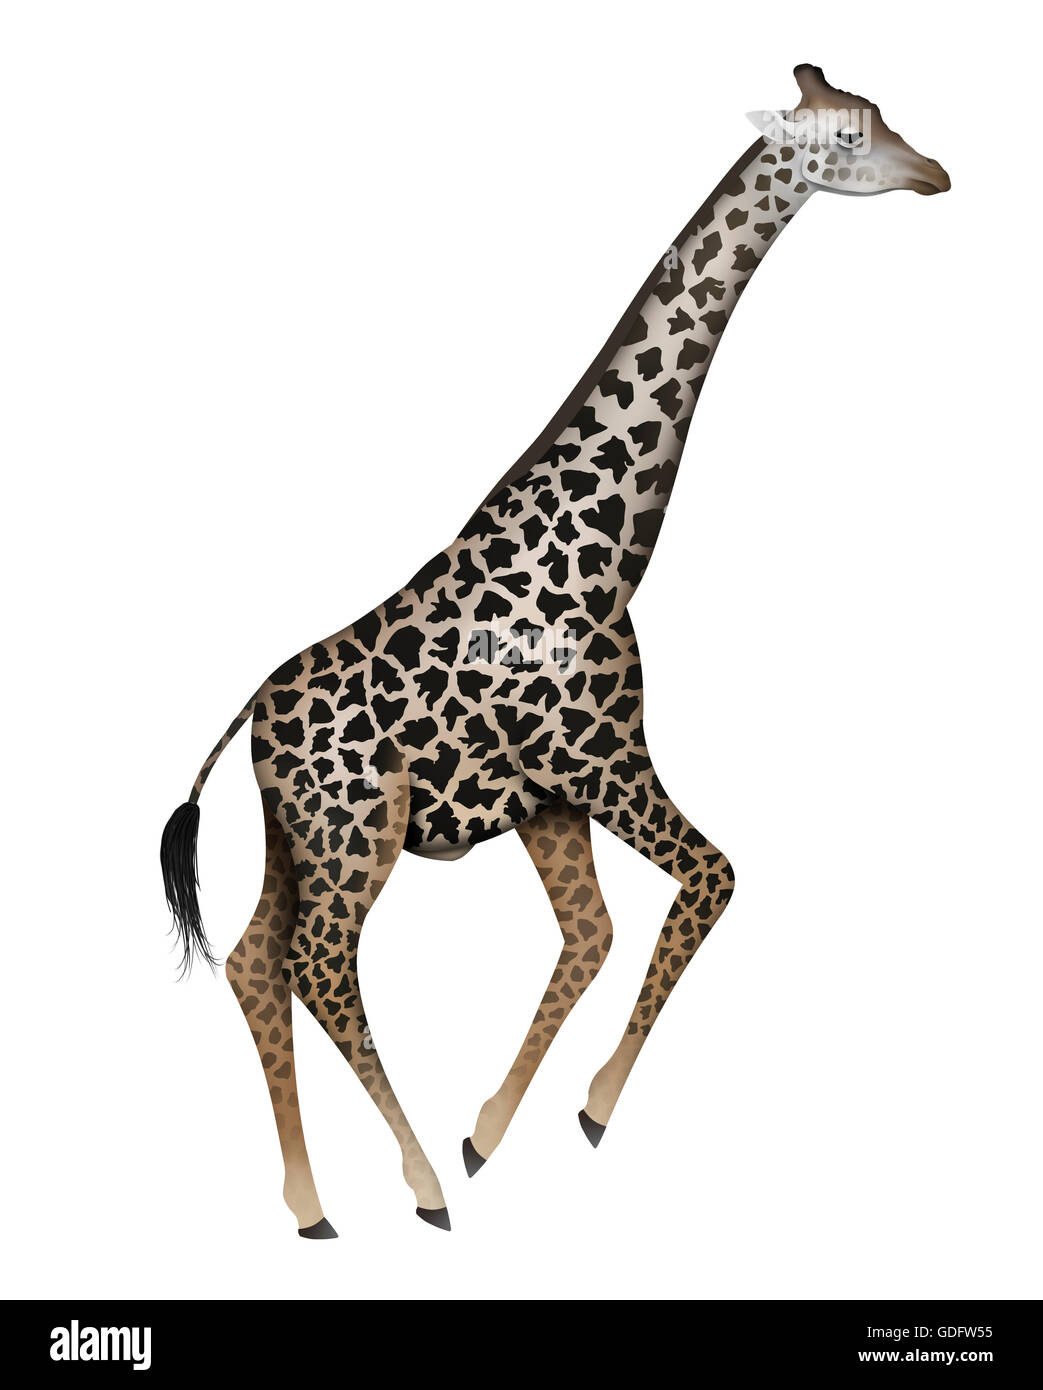 Thornicroft Giraffe (Giraffa camelopardalis thornicrofti). Adult male. The Thornicroft Giraffe is resident in Zambia where it is Stock Photo